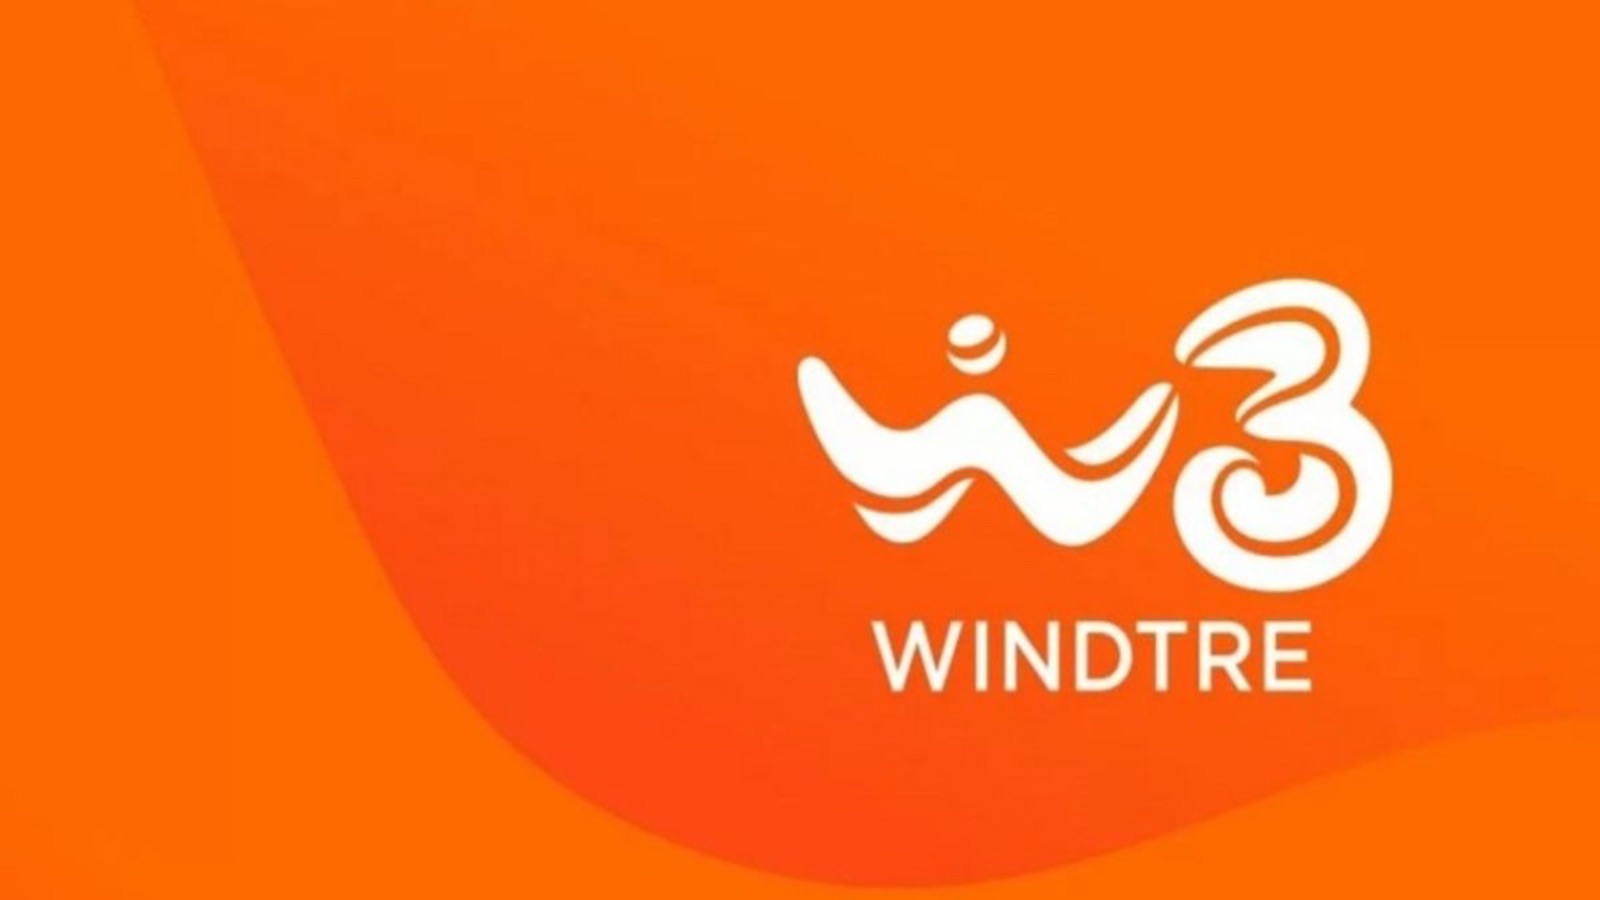 WindTRE batte TIM, 8 EURO al mese per 150 giga